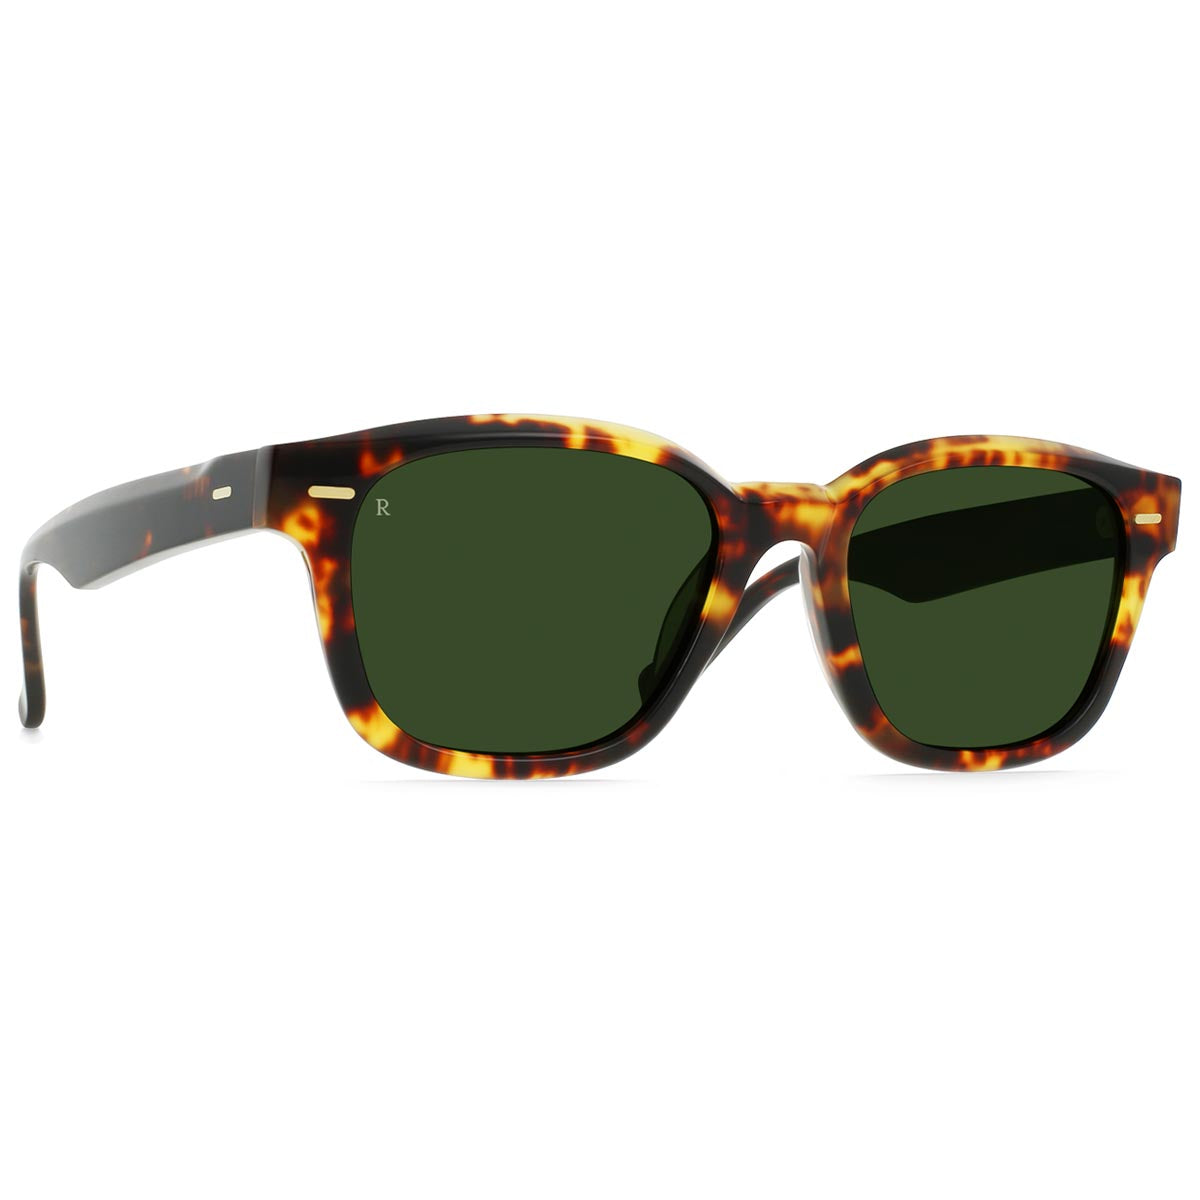 Raen Carby 53 Sunglasses - Ristetto Tortoise/Bottle Green image 1